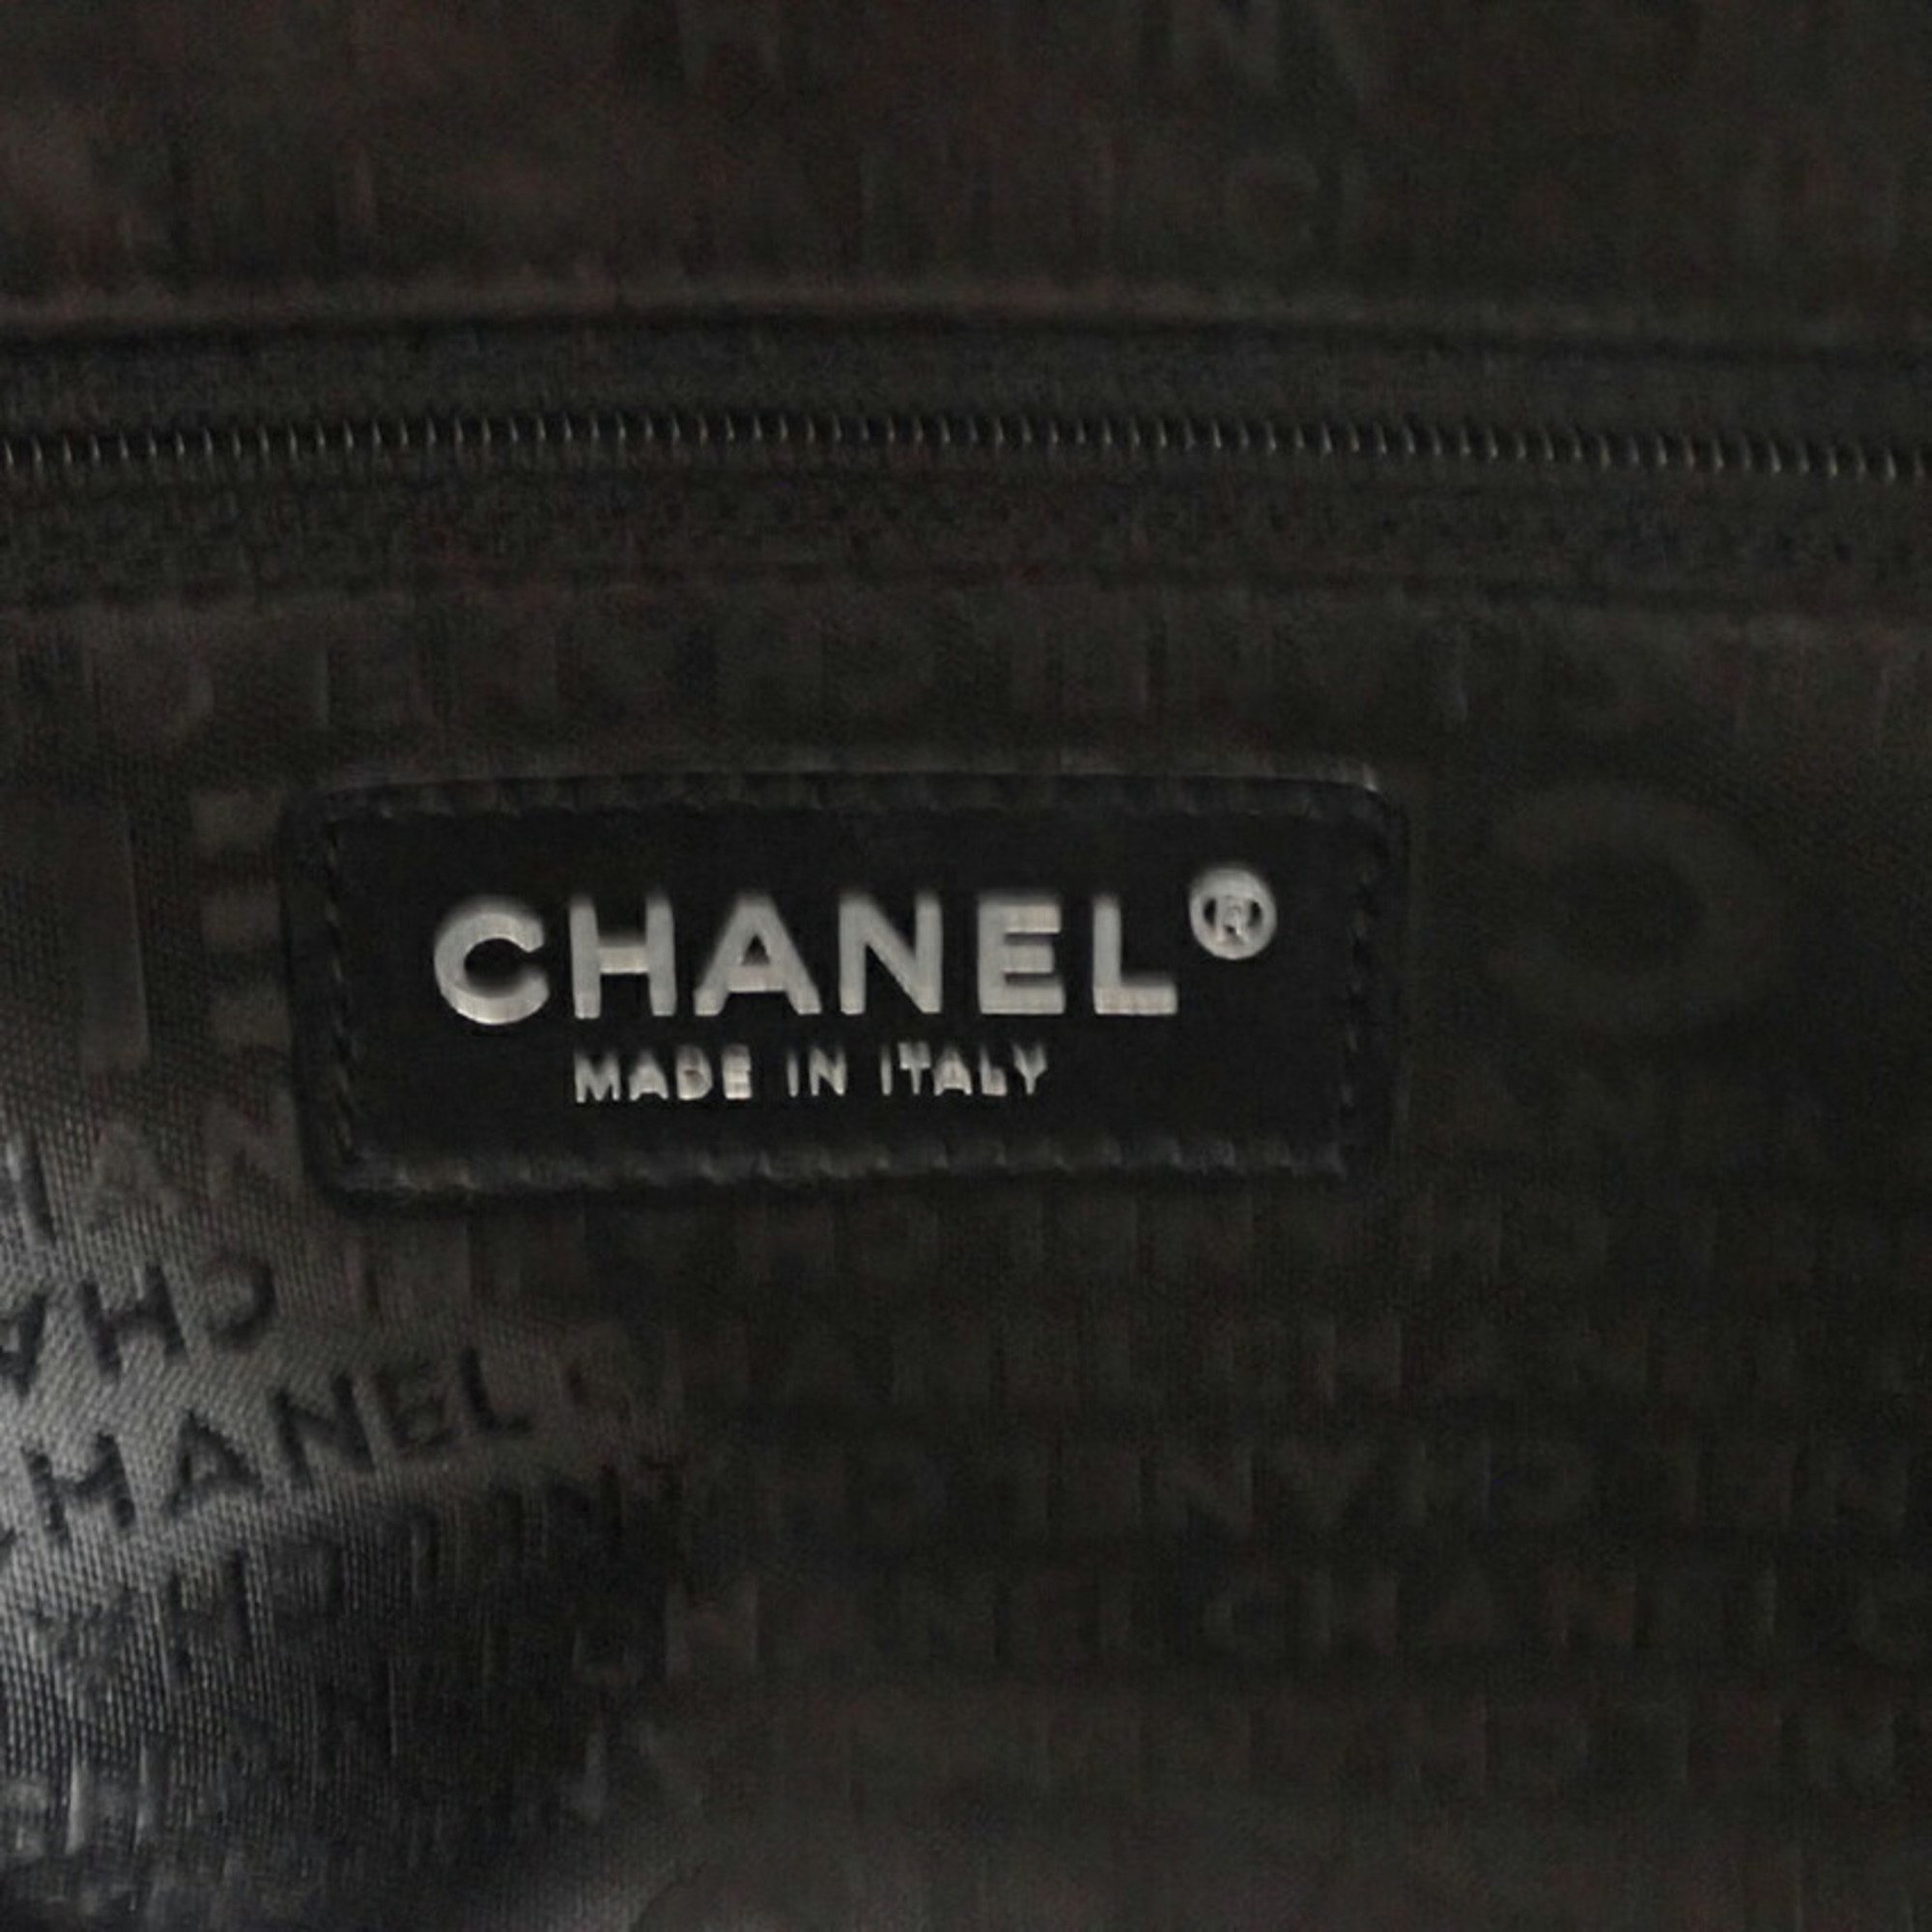 CHANEL Chanel chocolate bar Boston bag